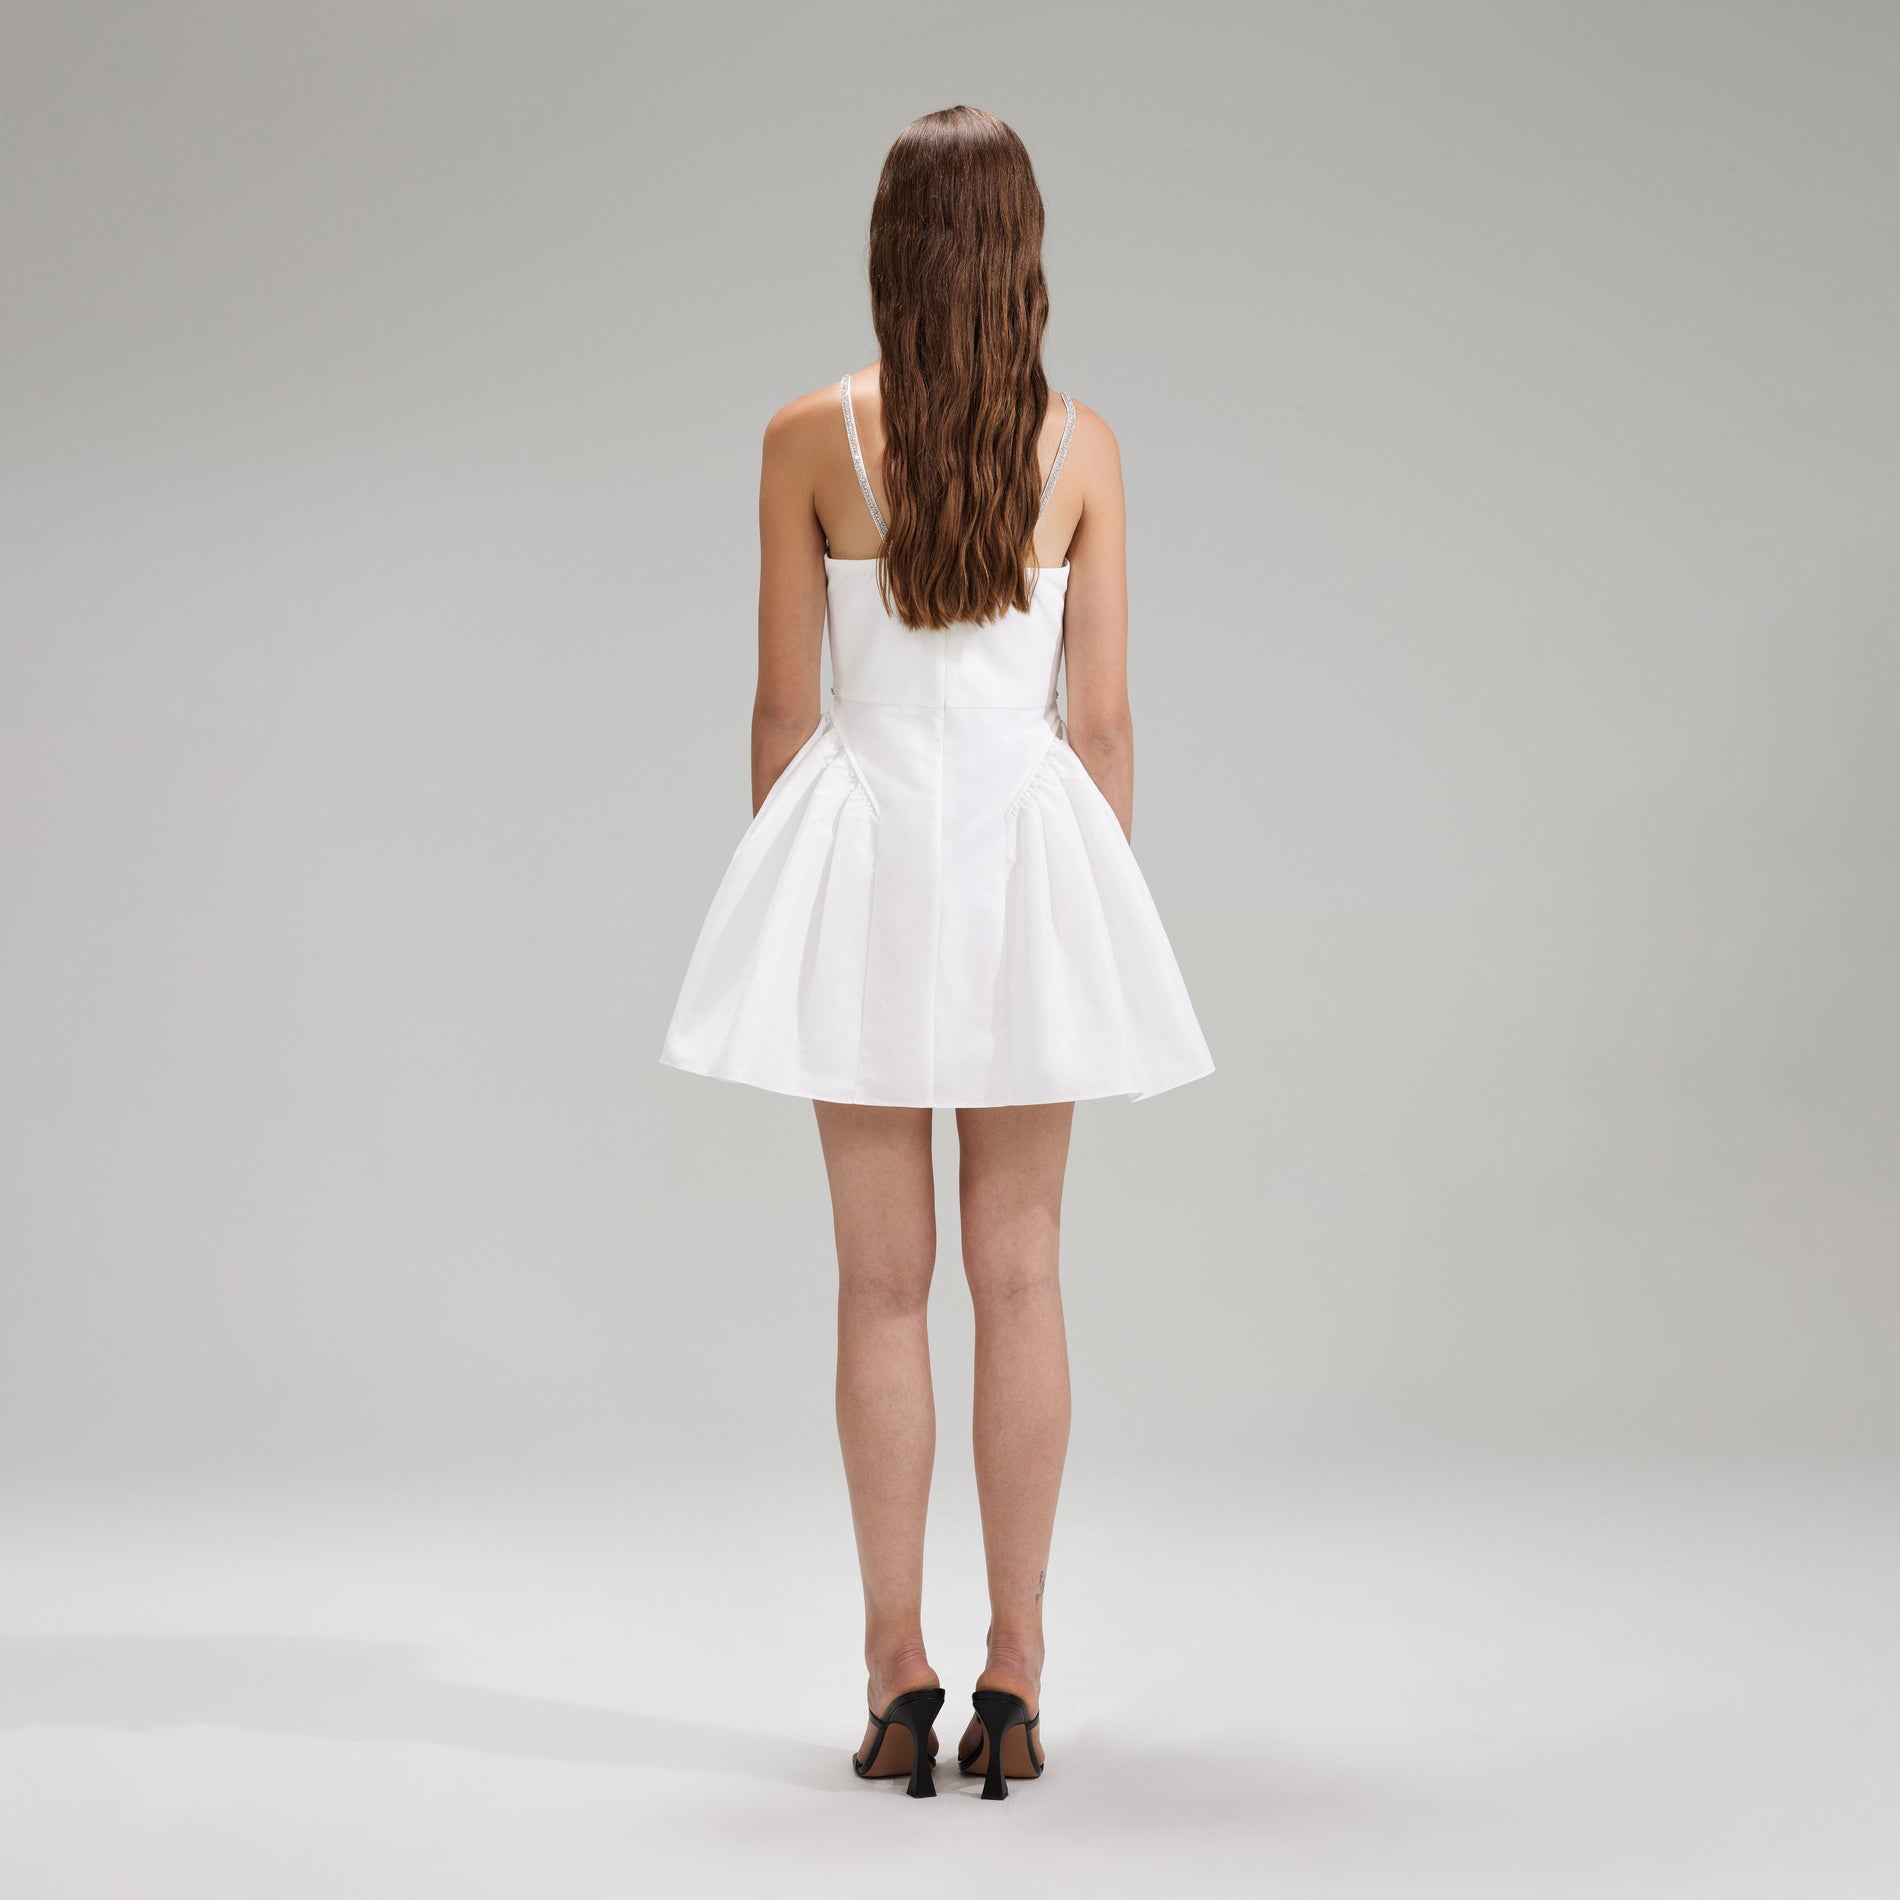 A woman wearing the White Taffeta Flared Mini Dress